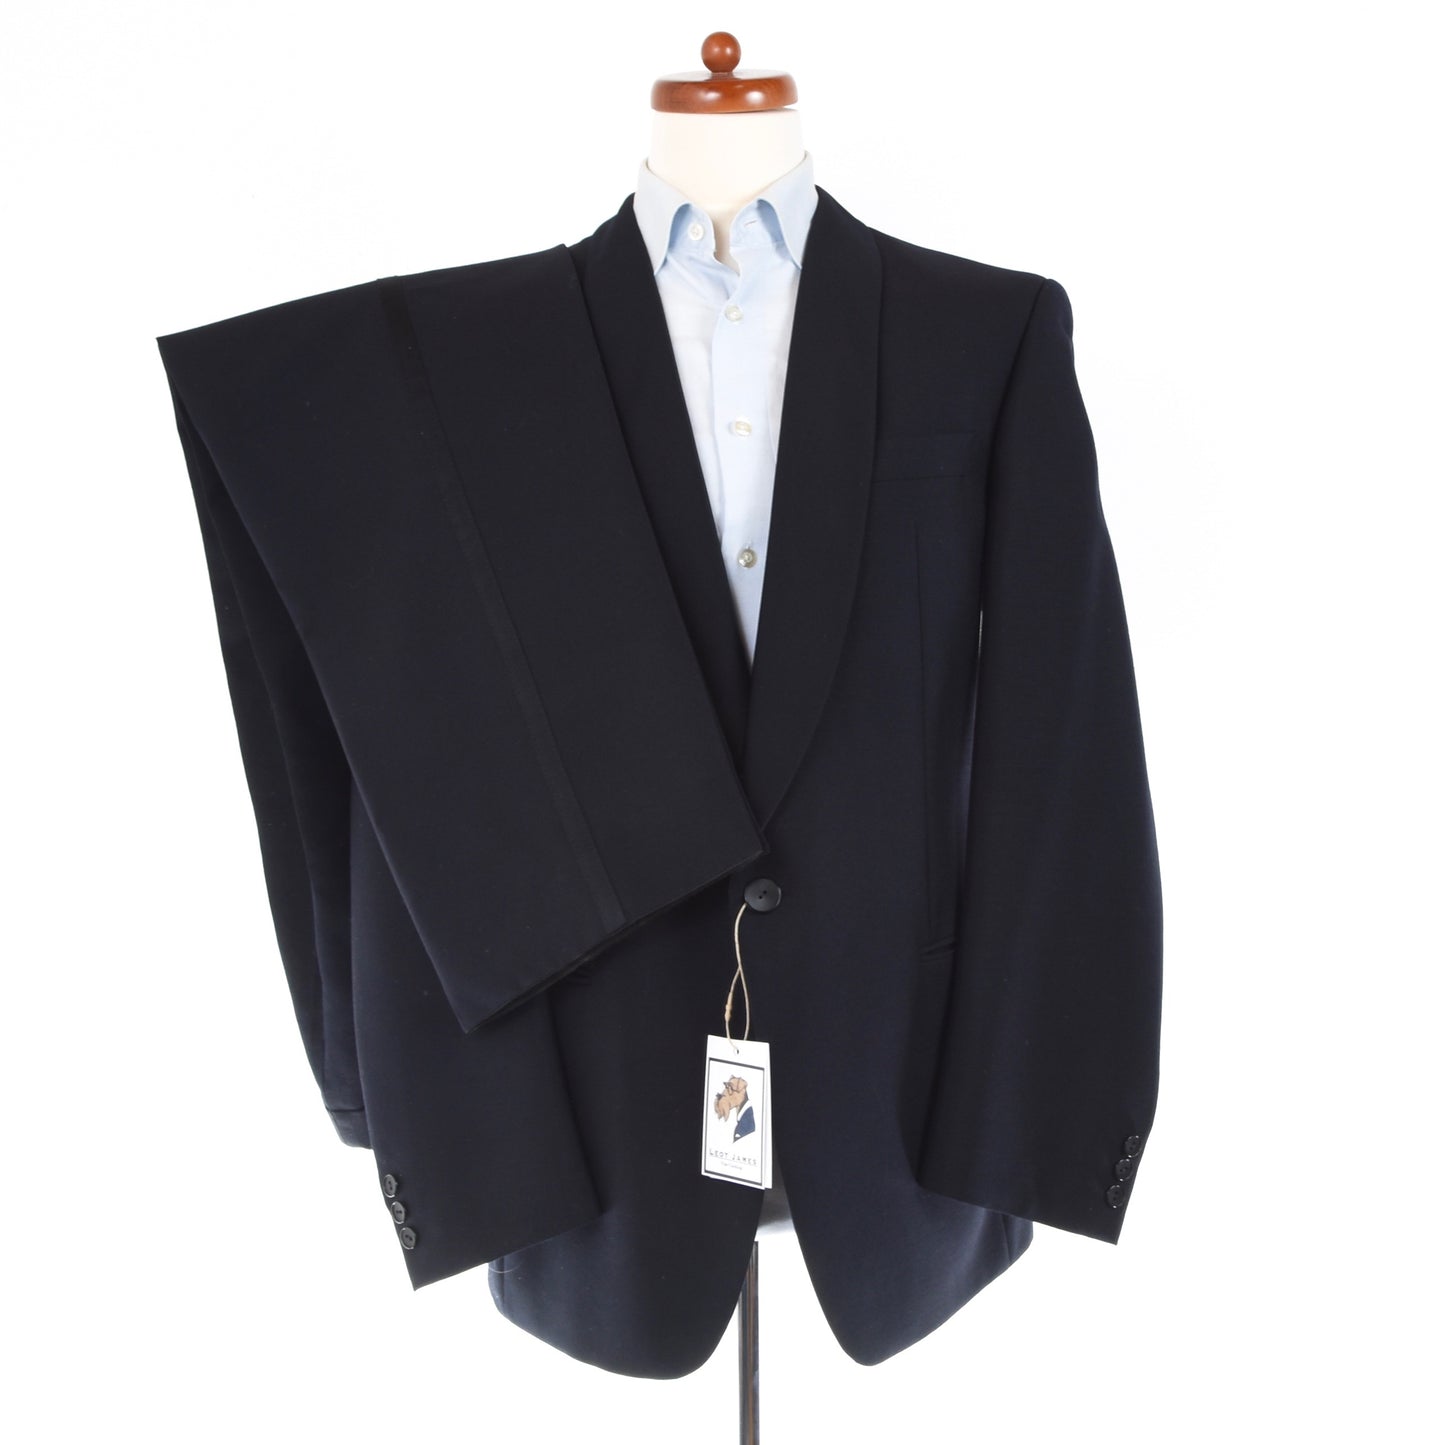 House of Gentlemen Vintage Wool-Mohair Shawl Collar Tuxedo - Navy Blue